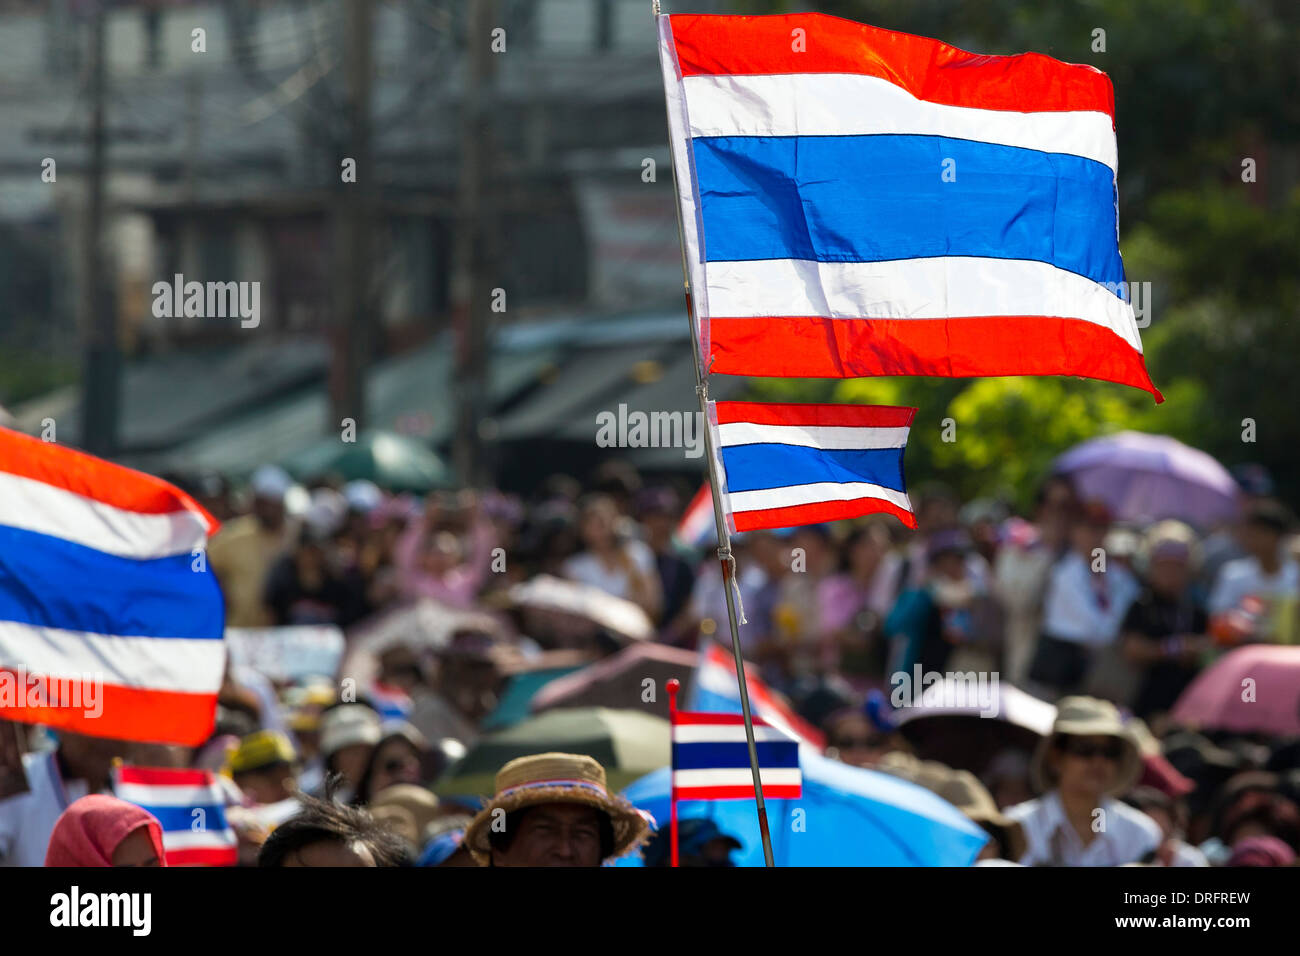 Political demonstration, Bangkok, Thailand Stock Photo